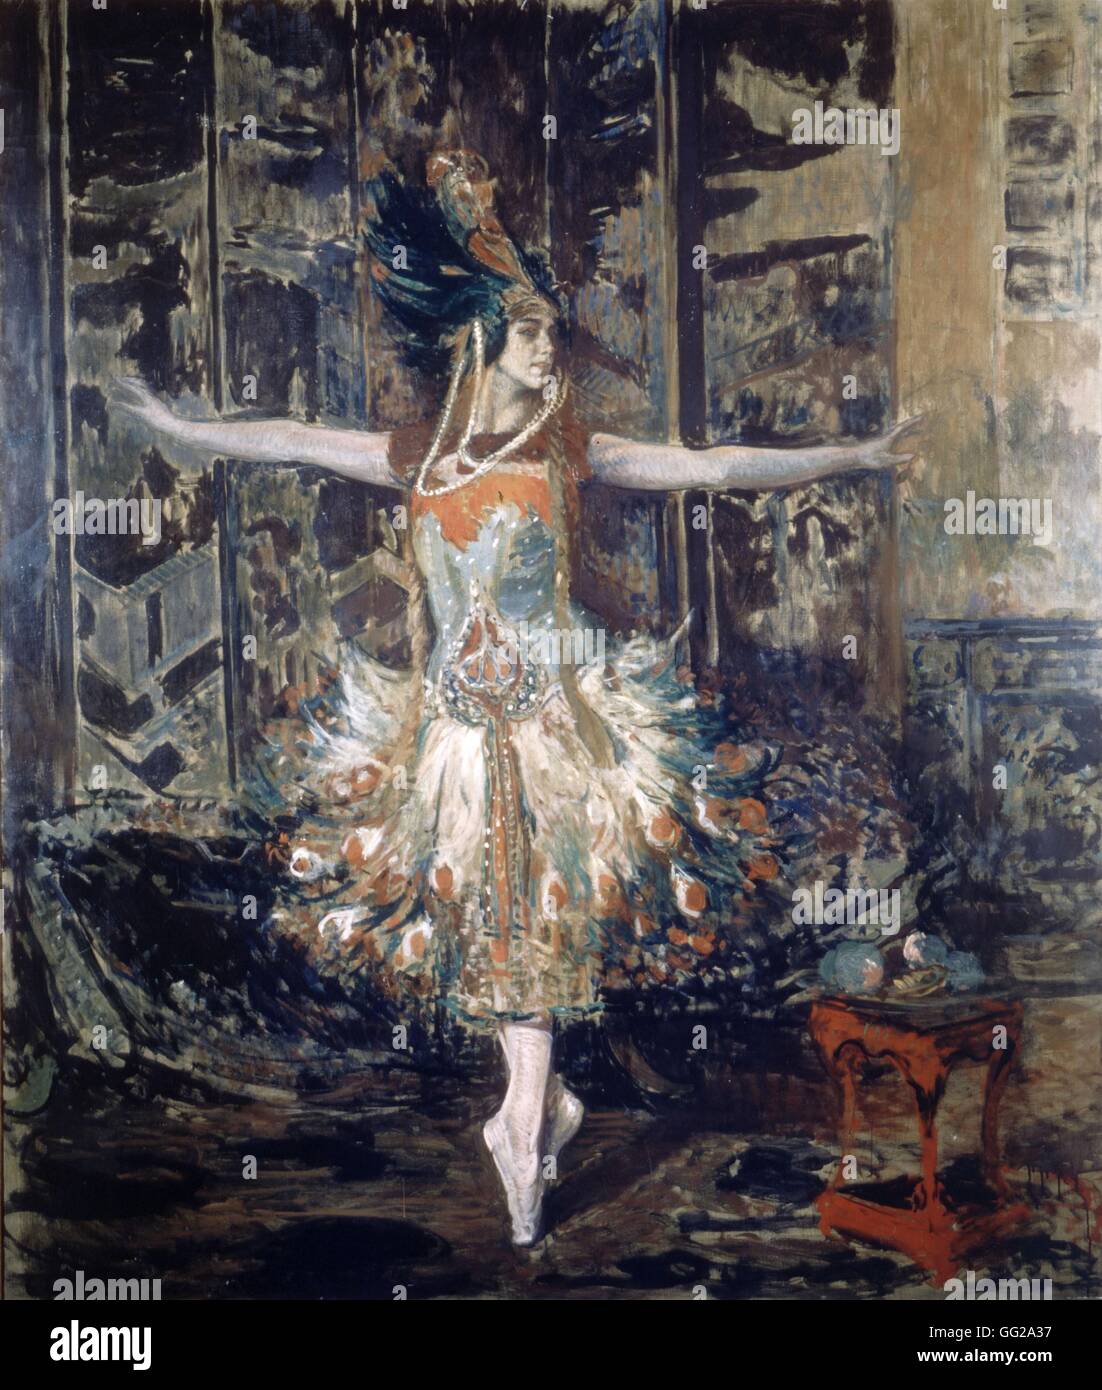 Jacques-Emile Blanche escuela francesa retrato de Tamara Karsavina como 'Firebird' 1910 Óleo sobre lienzo Paris. bibliothèque-musée de l'Opéra Garnier Foto de stock